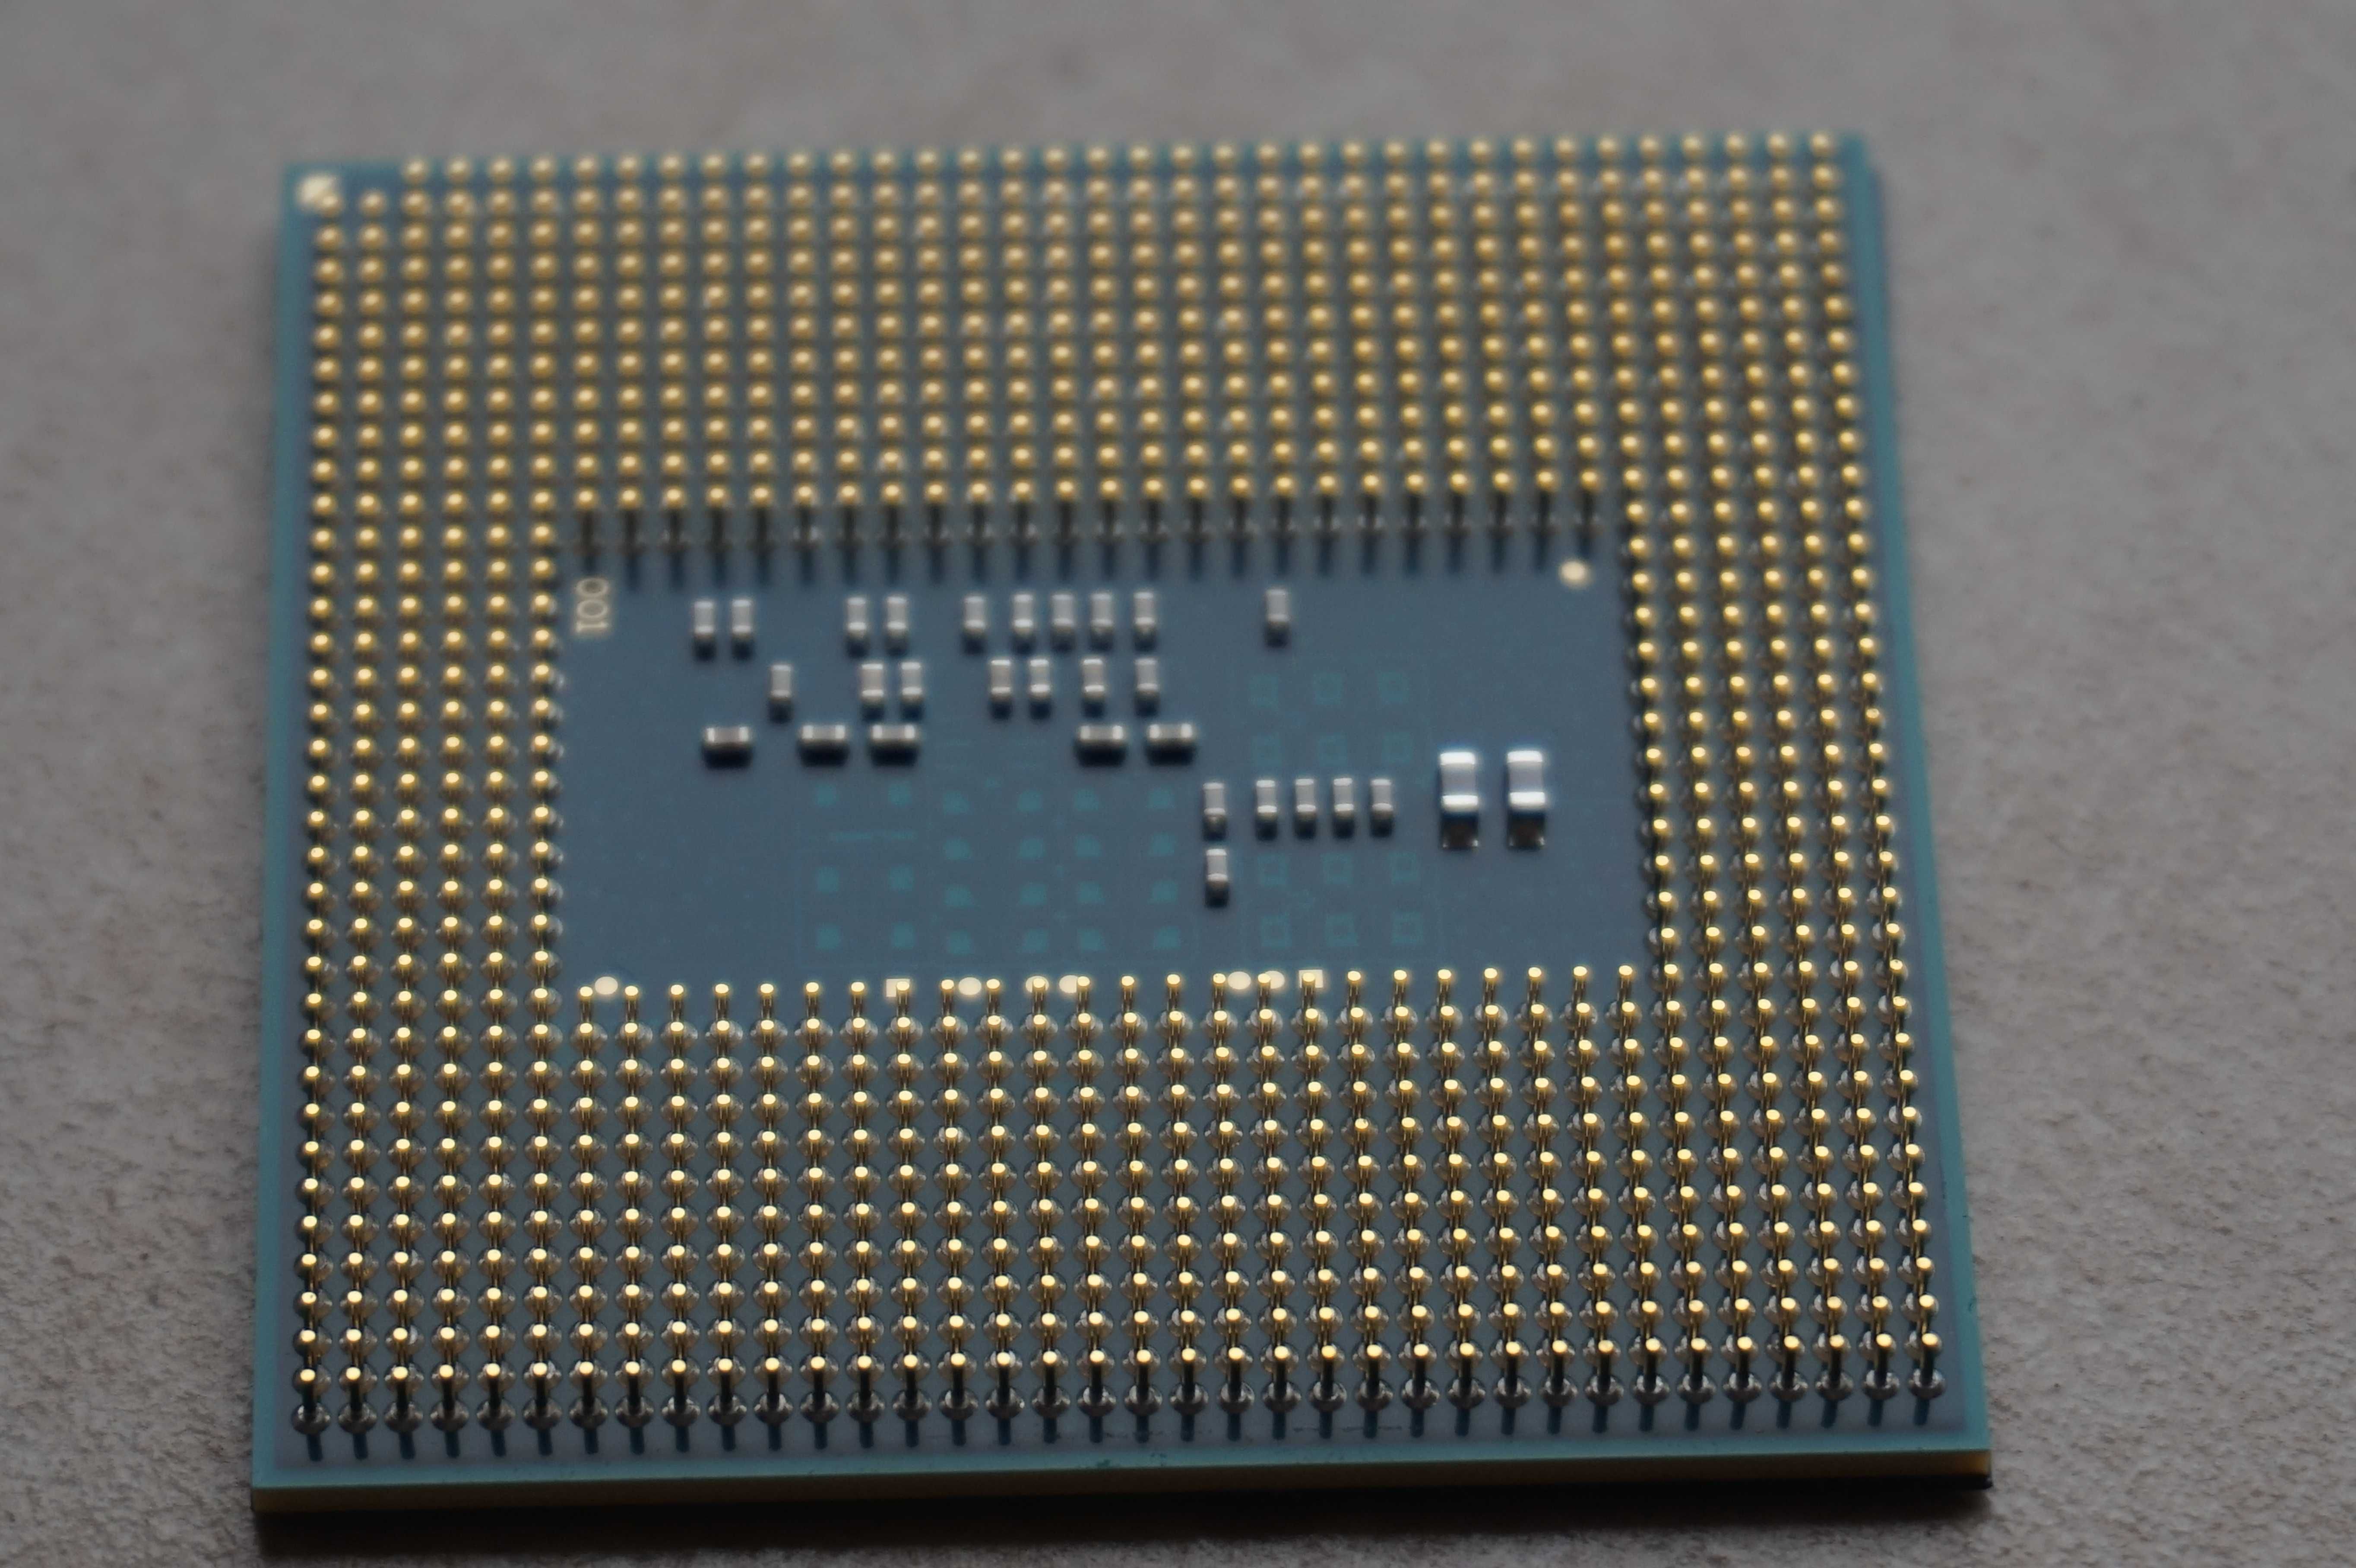 Procesor laptop intel core i5-4200M 2.5 Ghz do 3.10 GHz